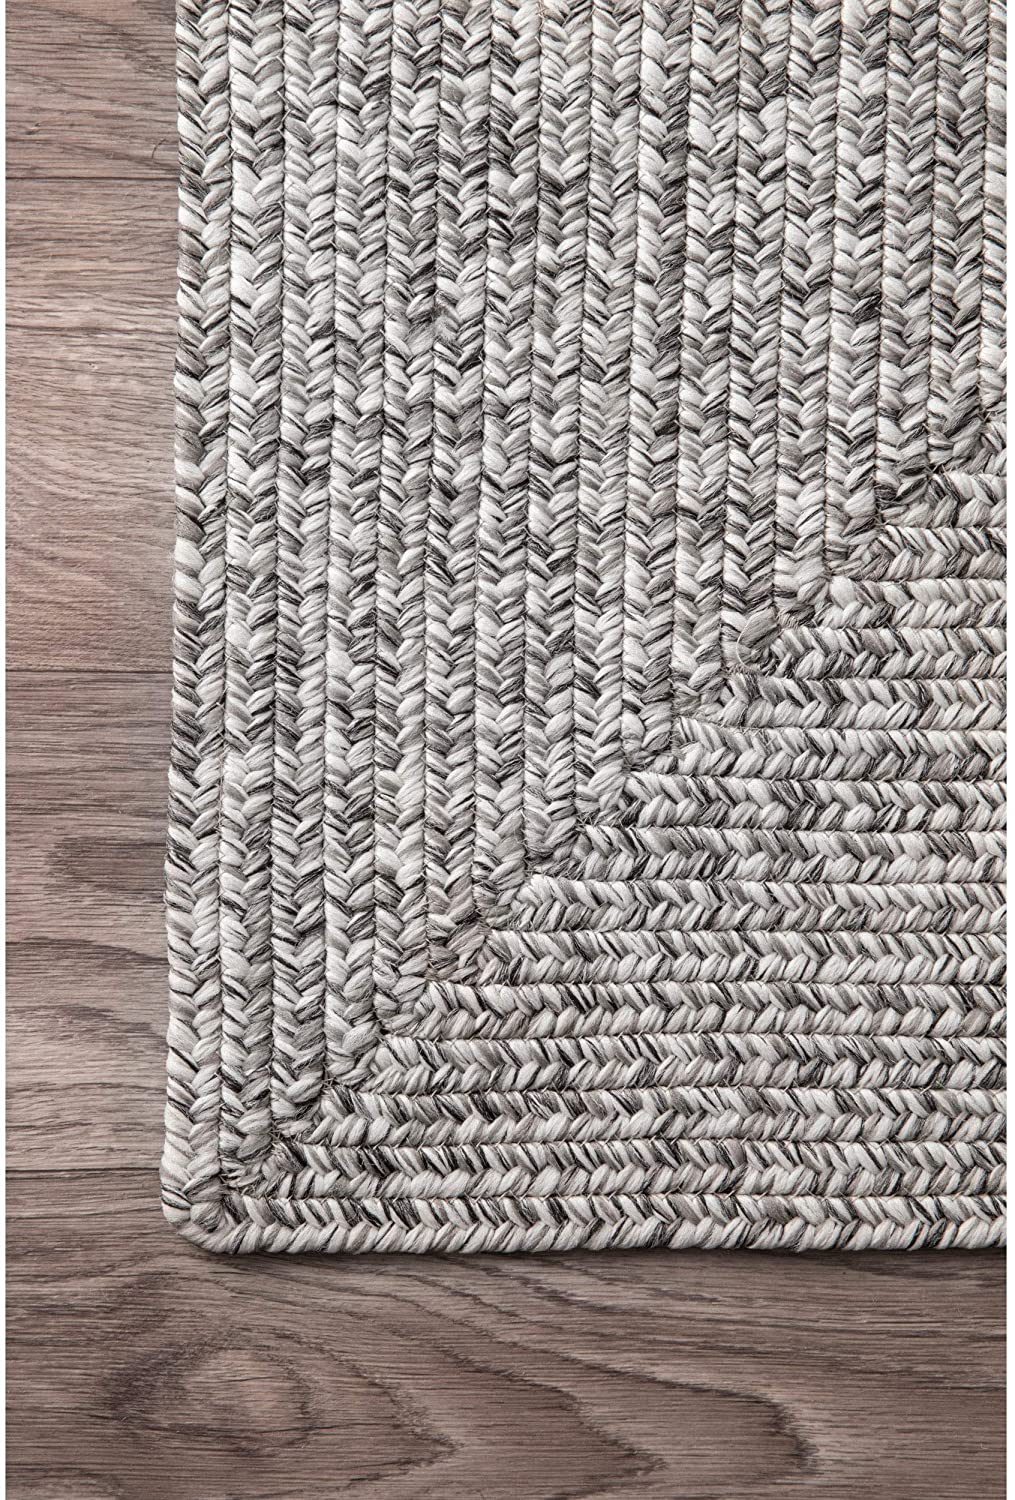 Braided Handmade Grey Indoor/Outdoor Soft Area Rug